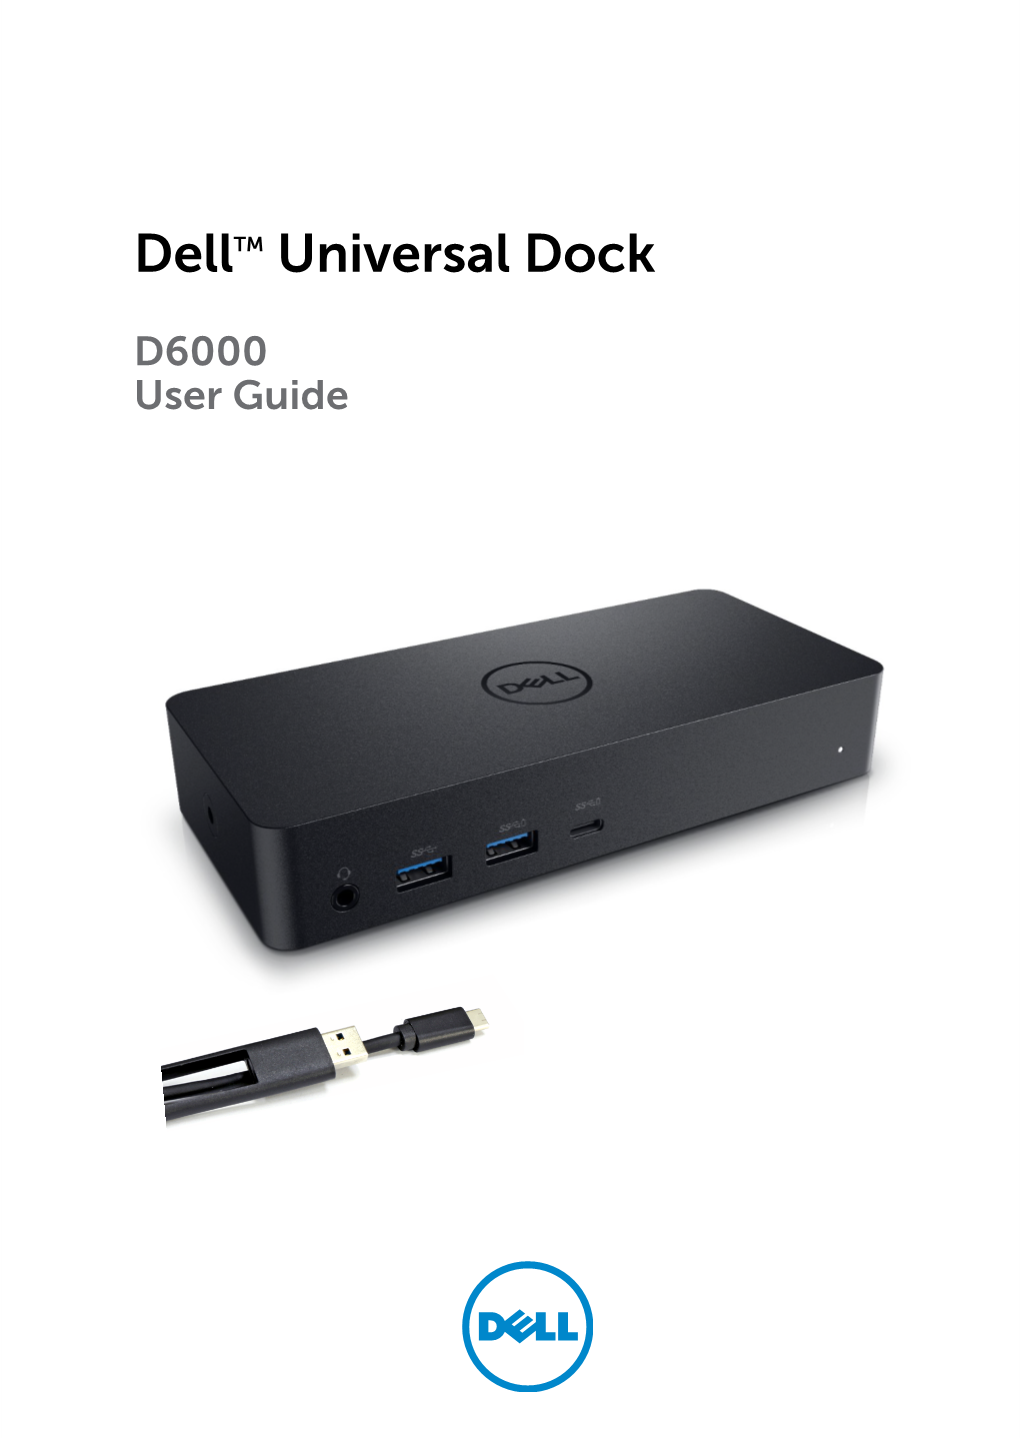 Dell Universal Dock D6000 User Guide